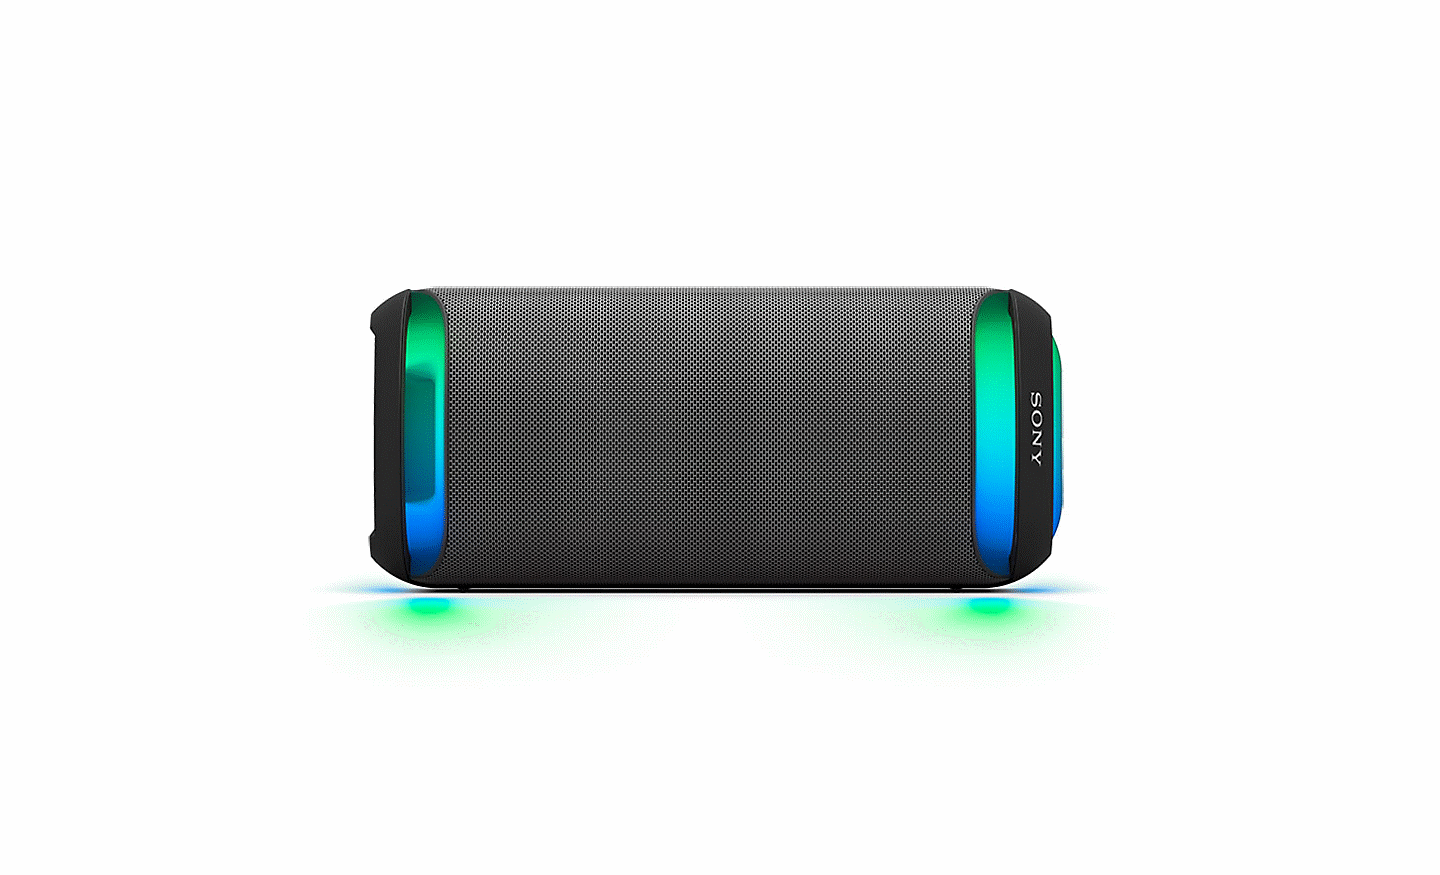 Gambar Speaker Pesta Nirkabel SRS-XV800 diletakkan secara horizontal dengan pencahayaan sekitar hijau dan biru